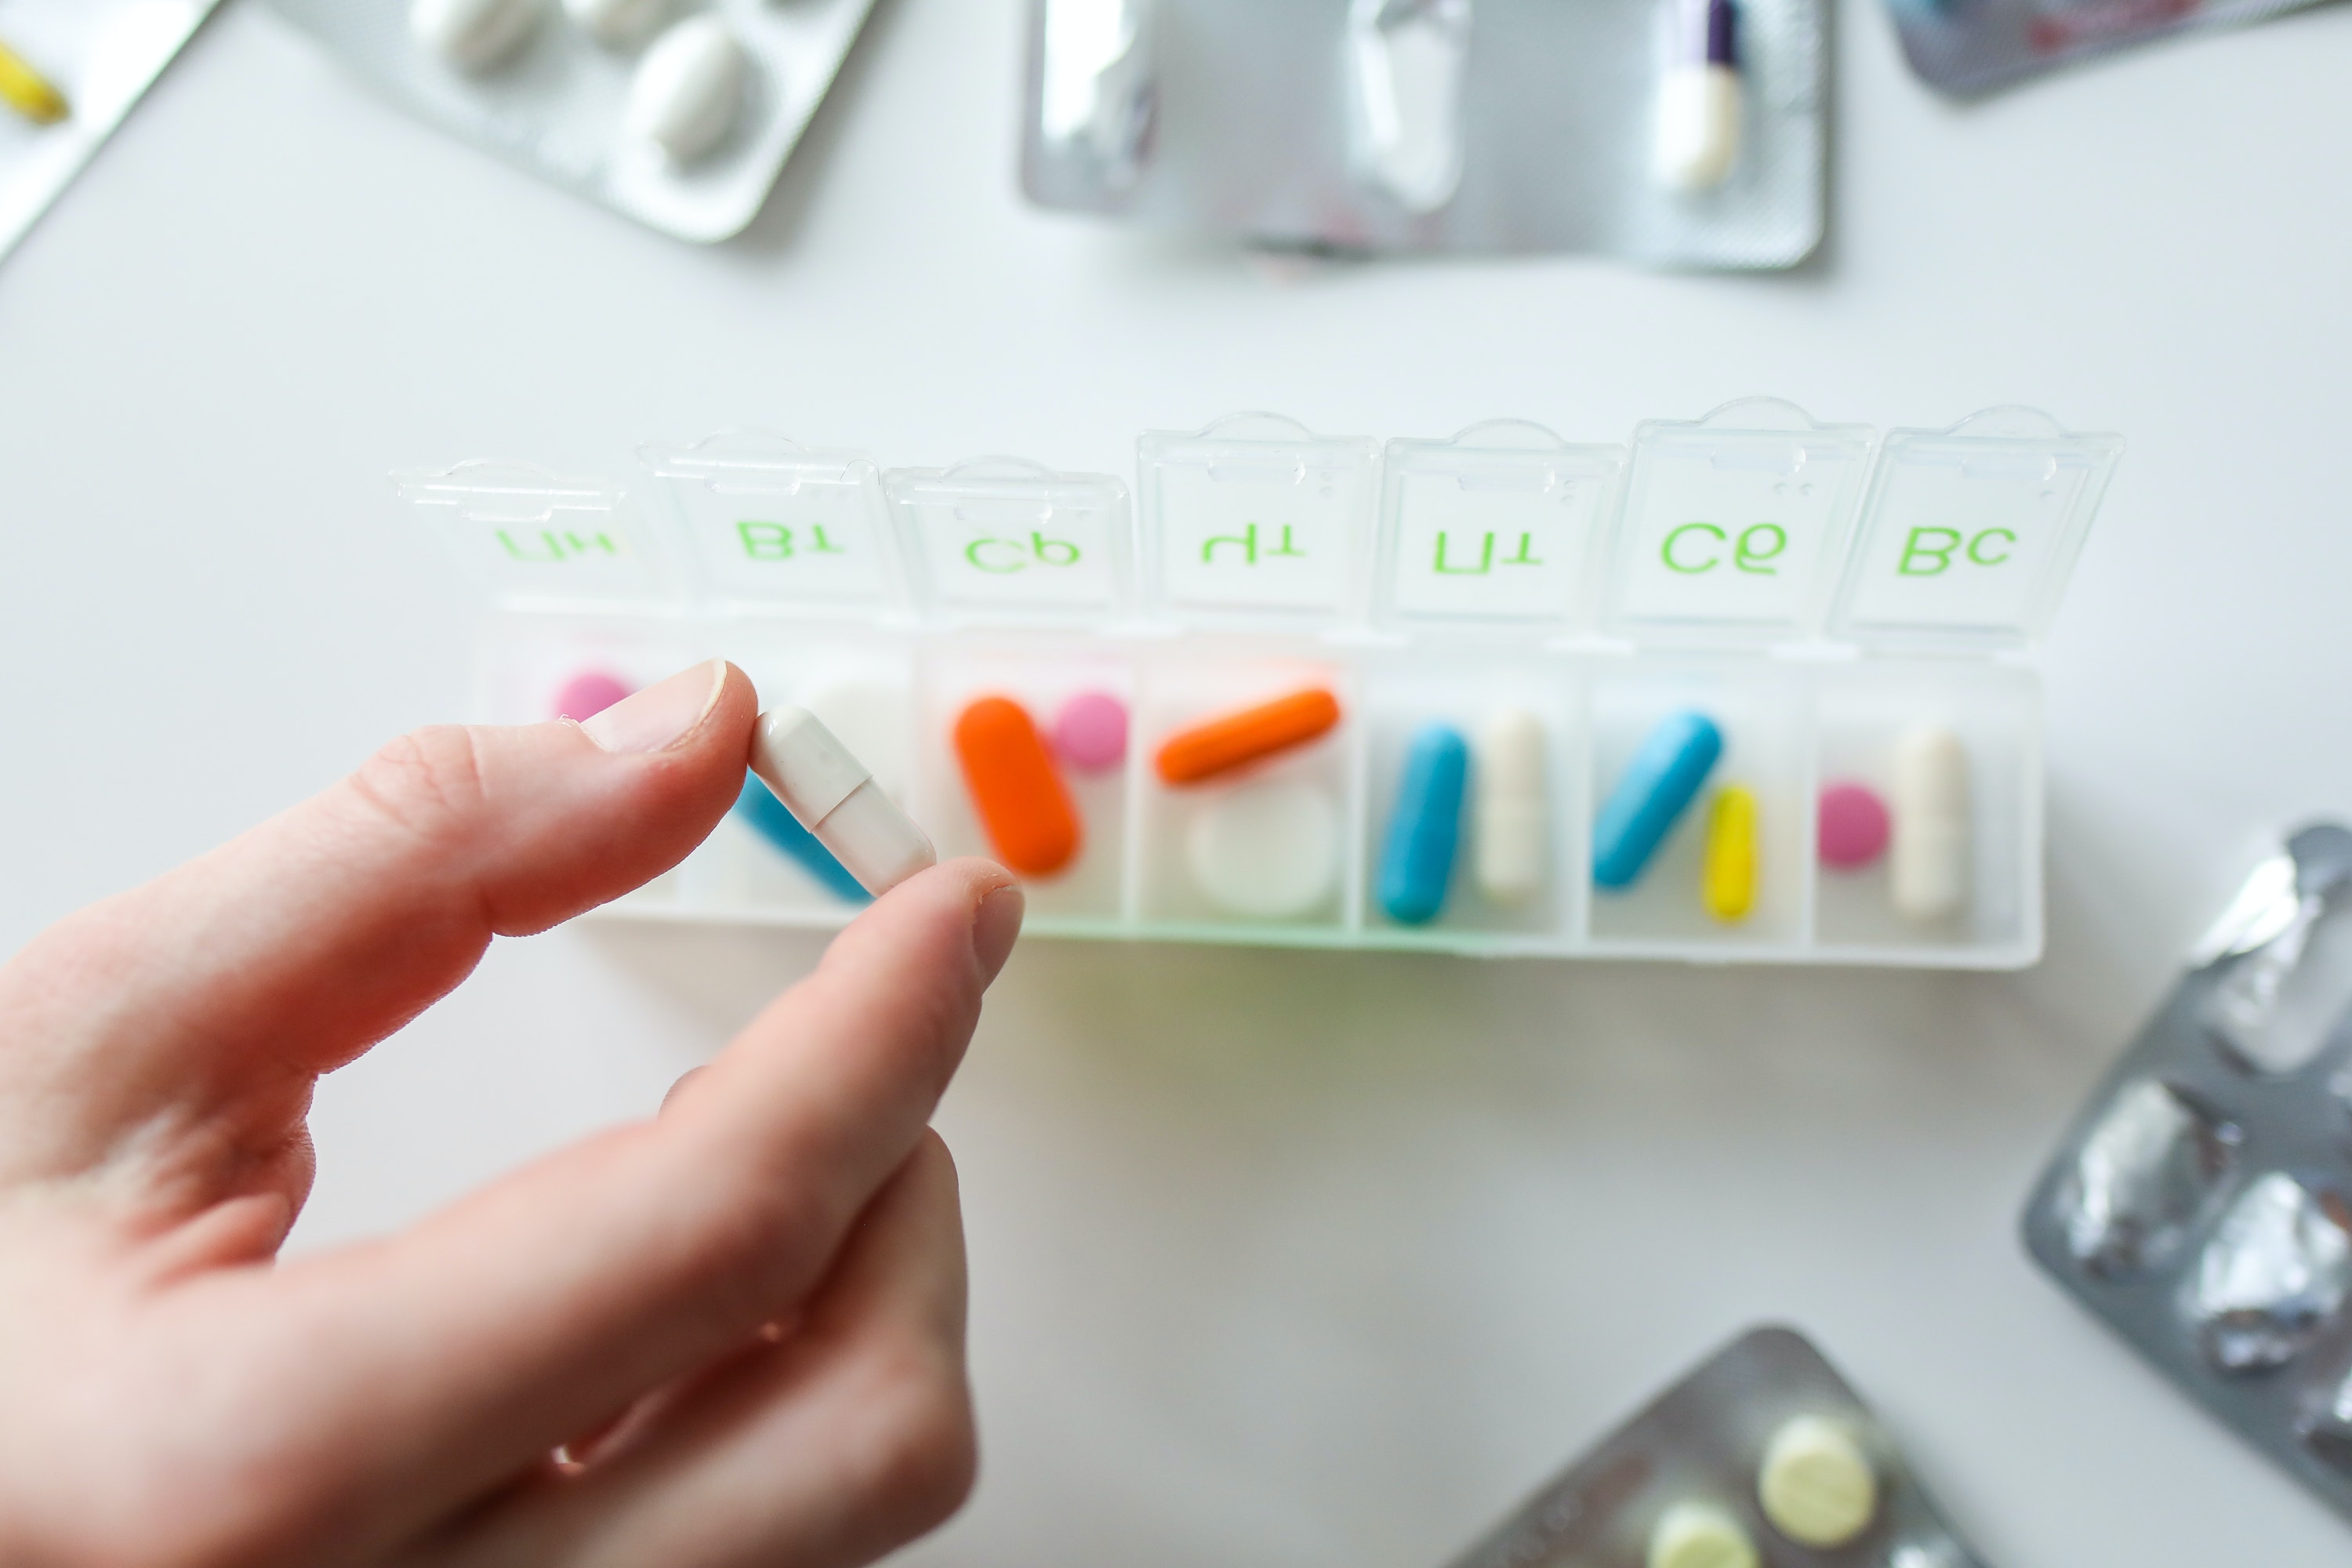 Australian Study Suggests Separating Prescription, Street Opioid Use